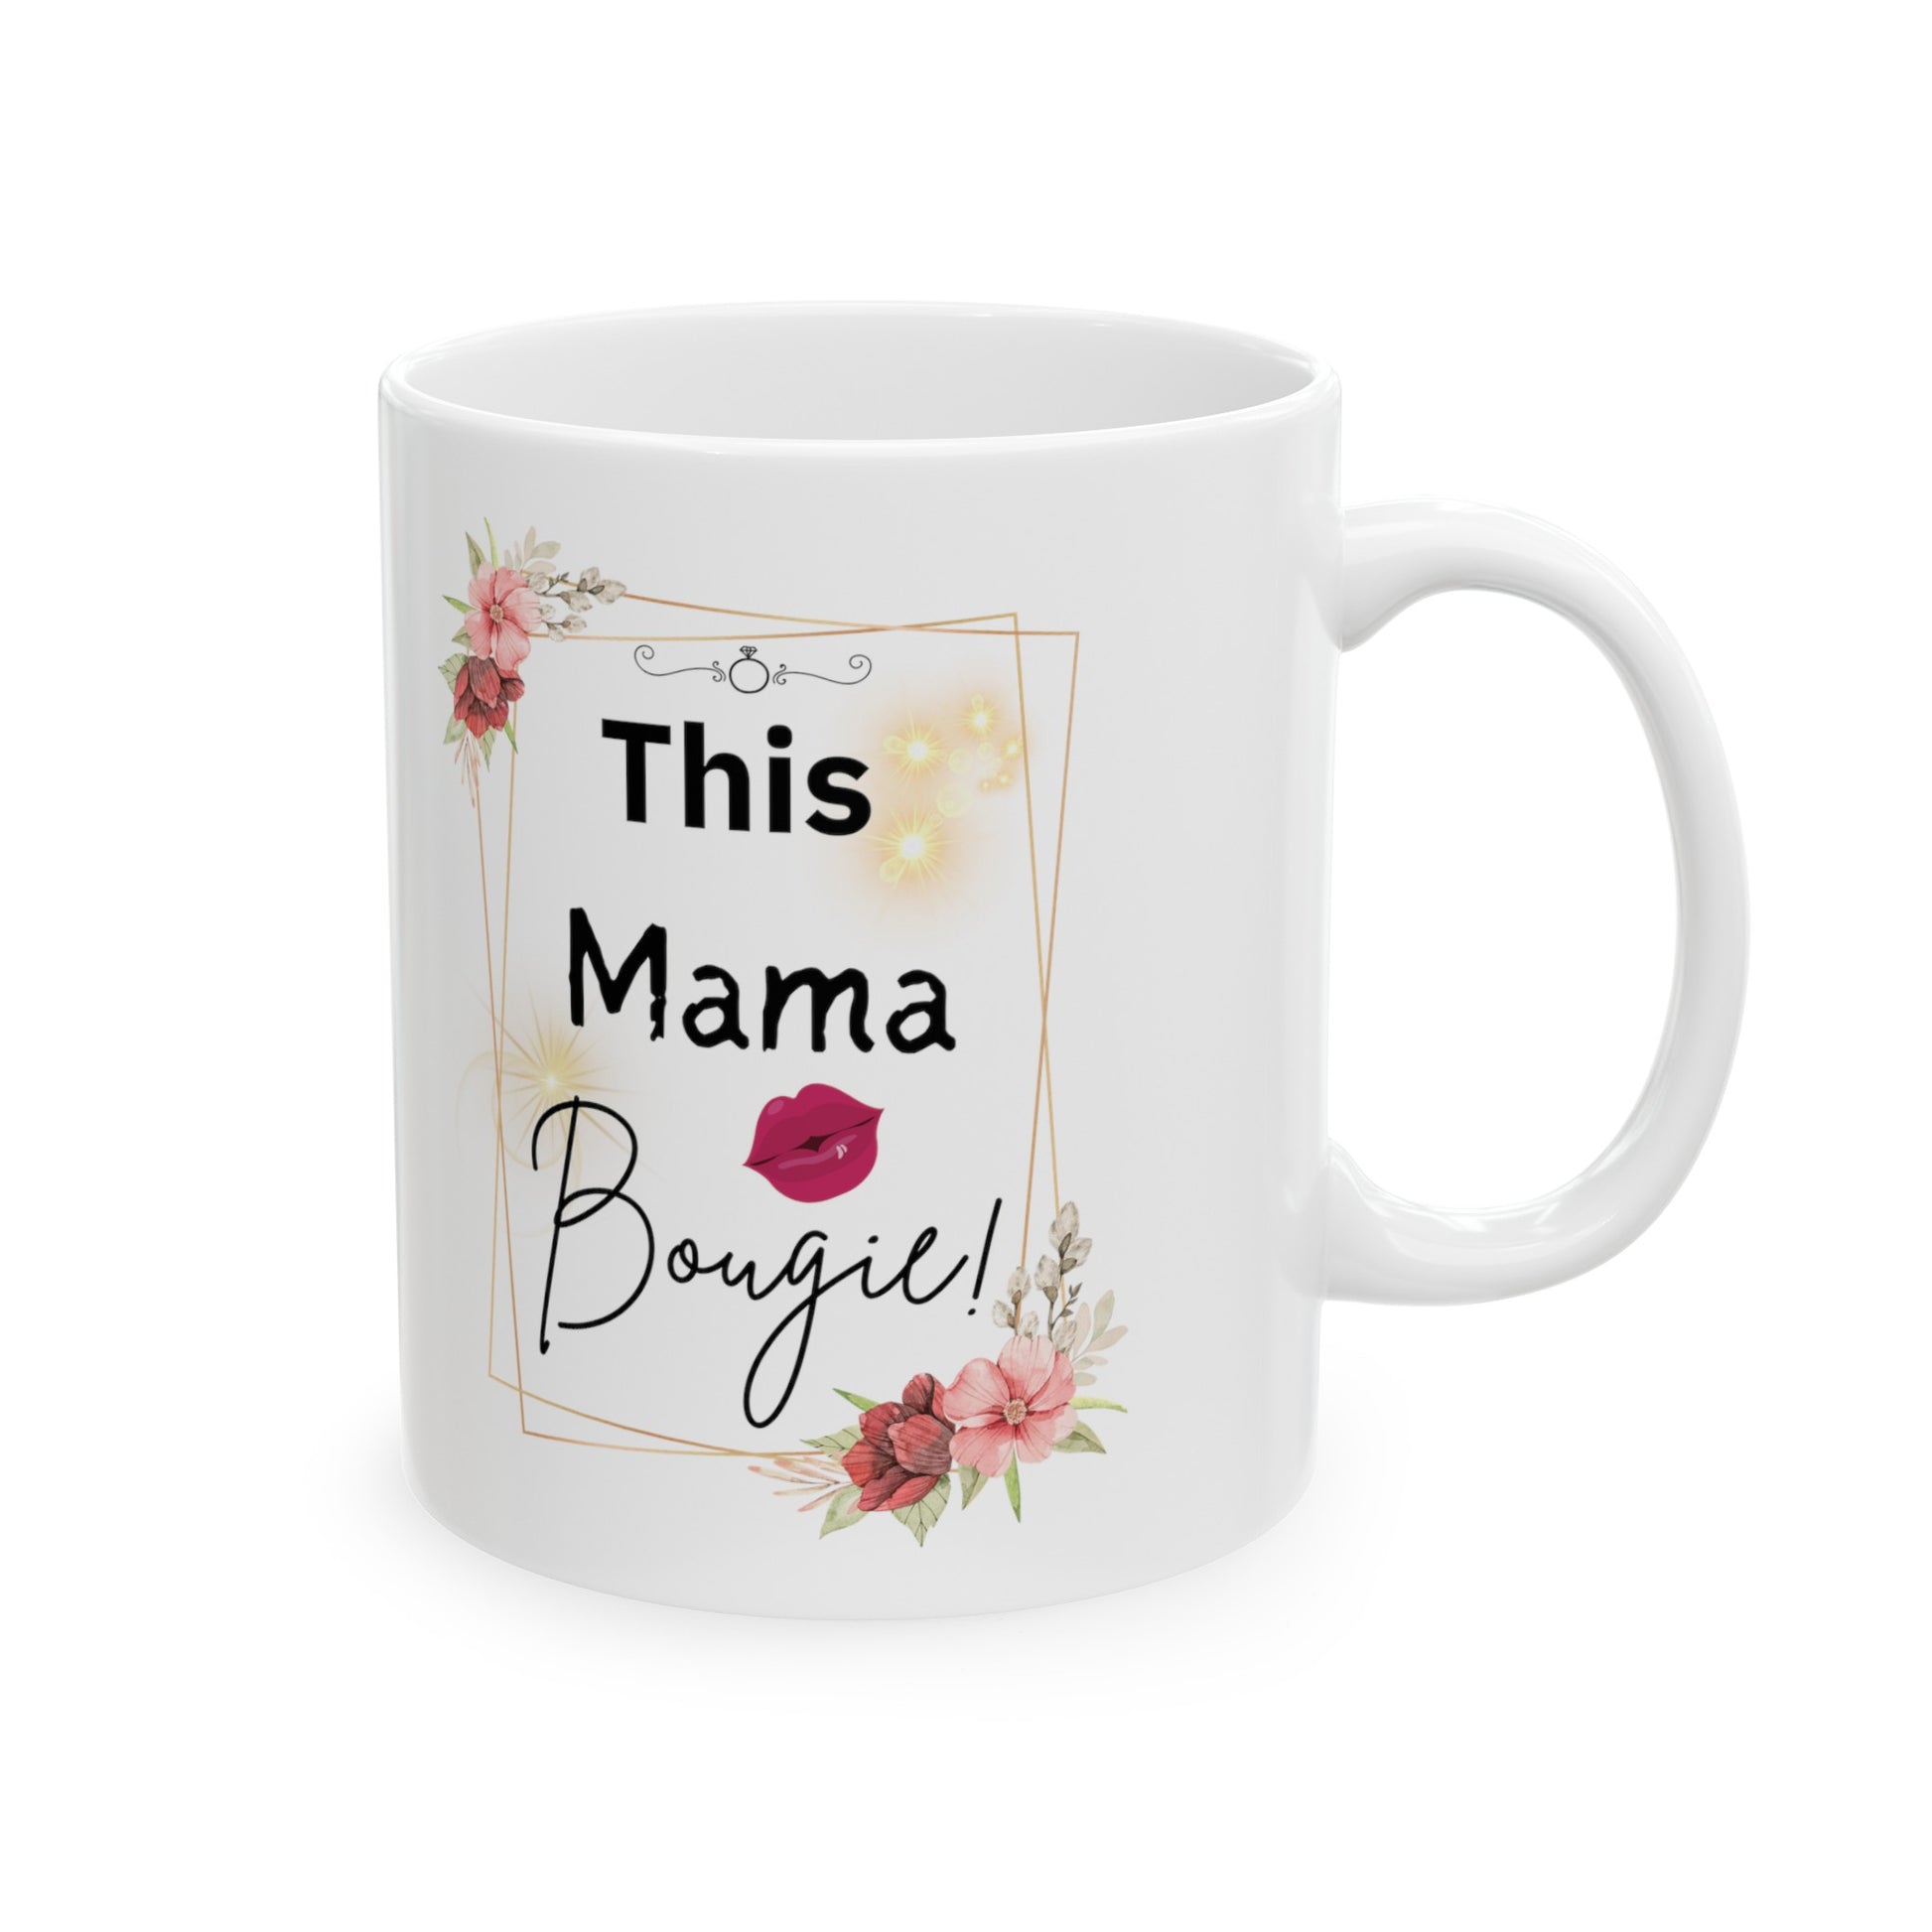 This Mama Bougie Ceramic Mug - The Witchy Gypsy